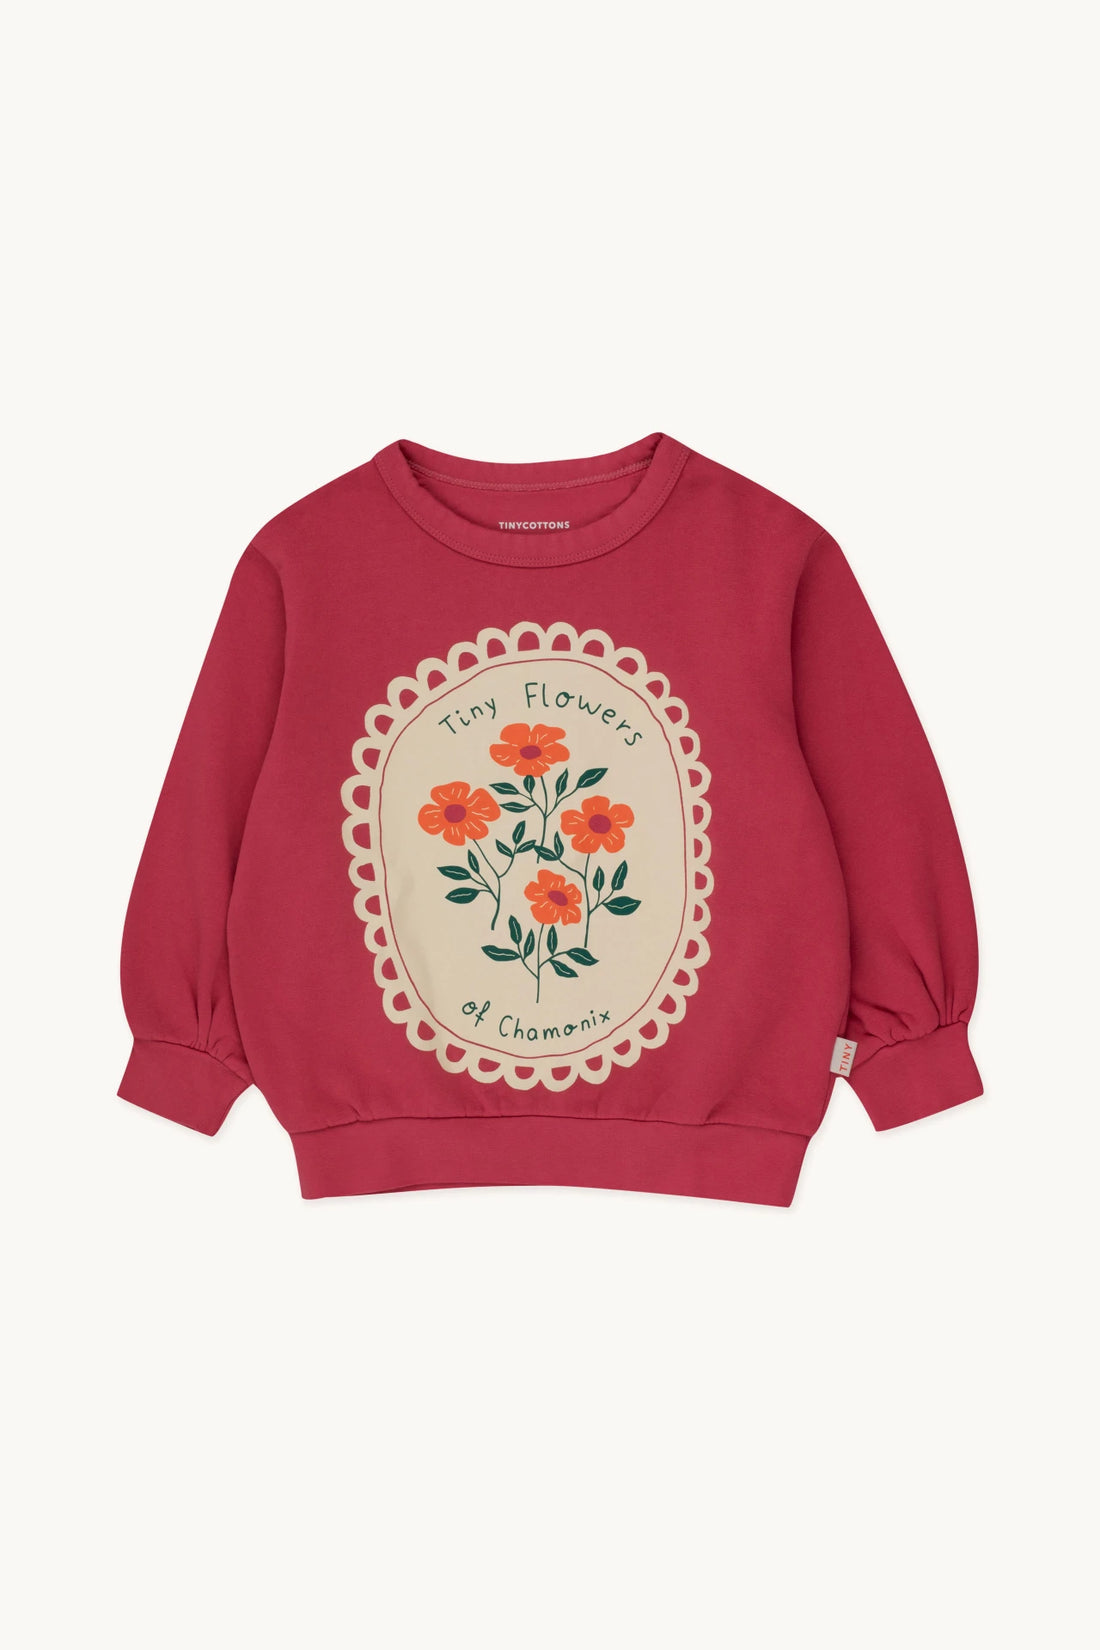 Tiny Cottons - flowers sweatshirt - berry